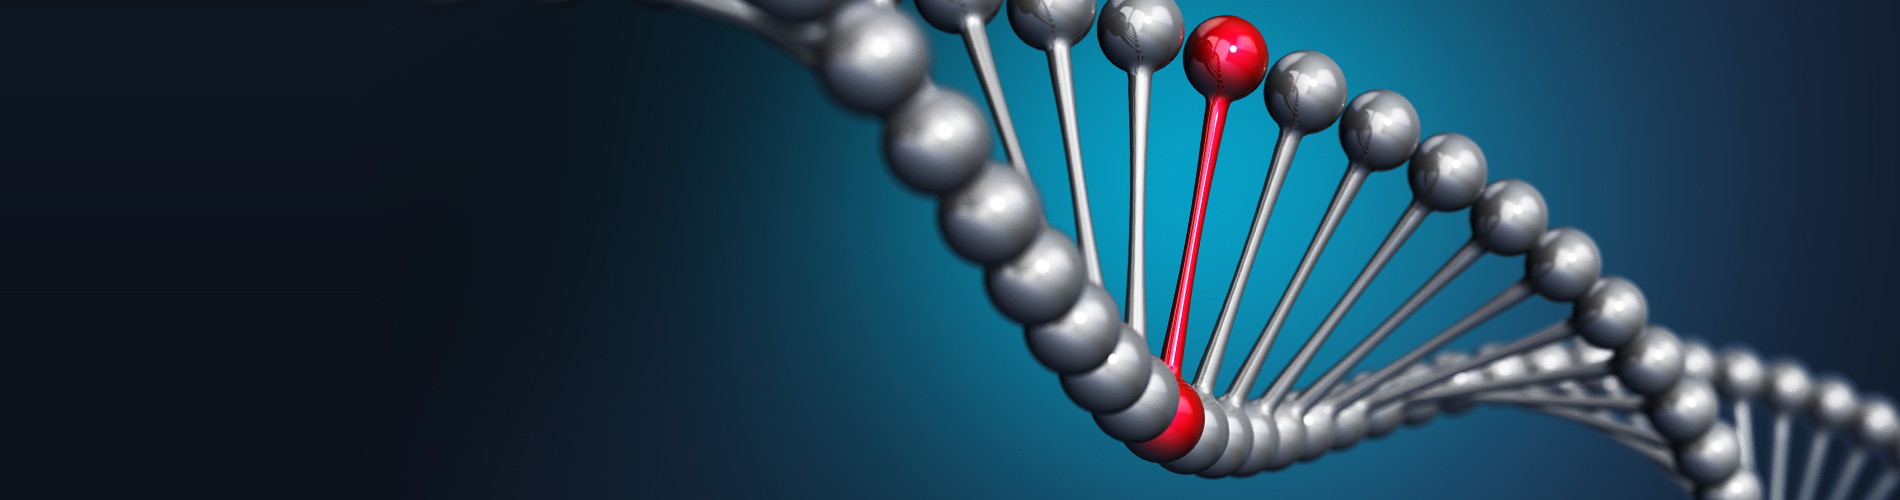 Epigenetics: Your Behavior and Your DNA